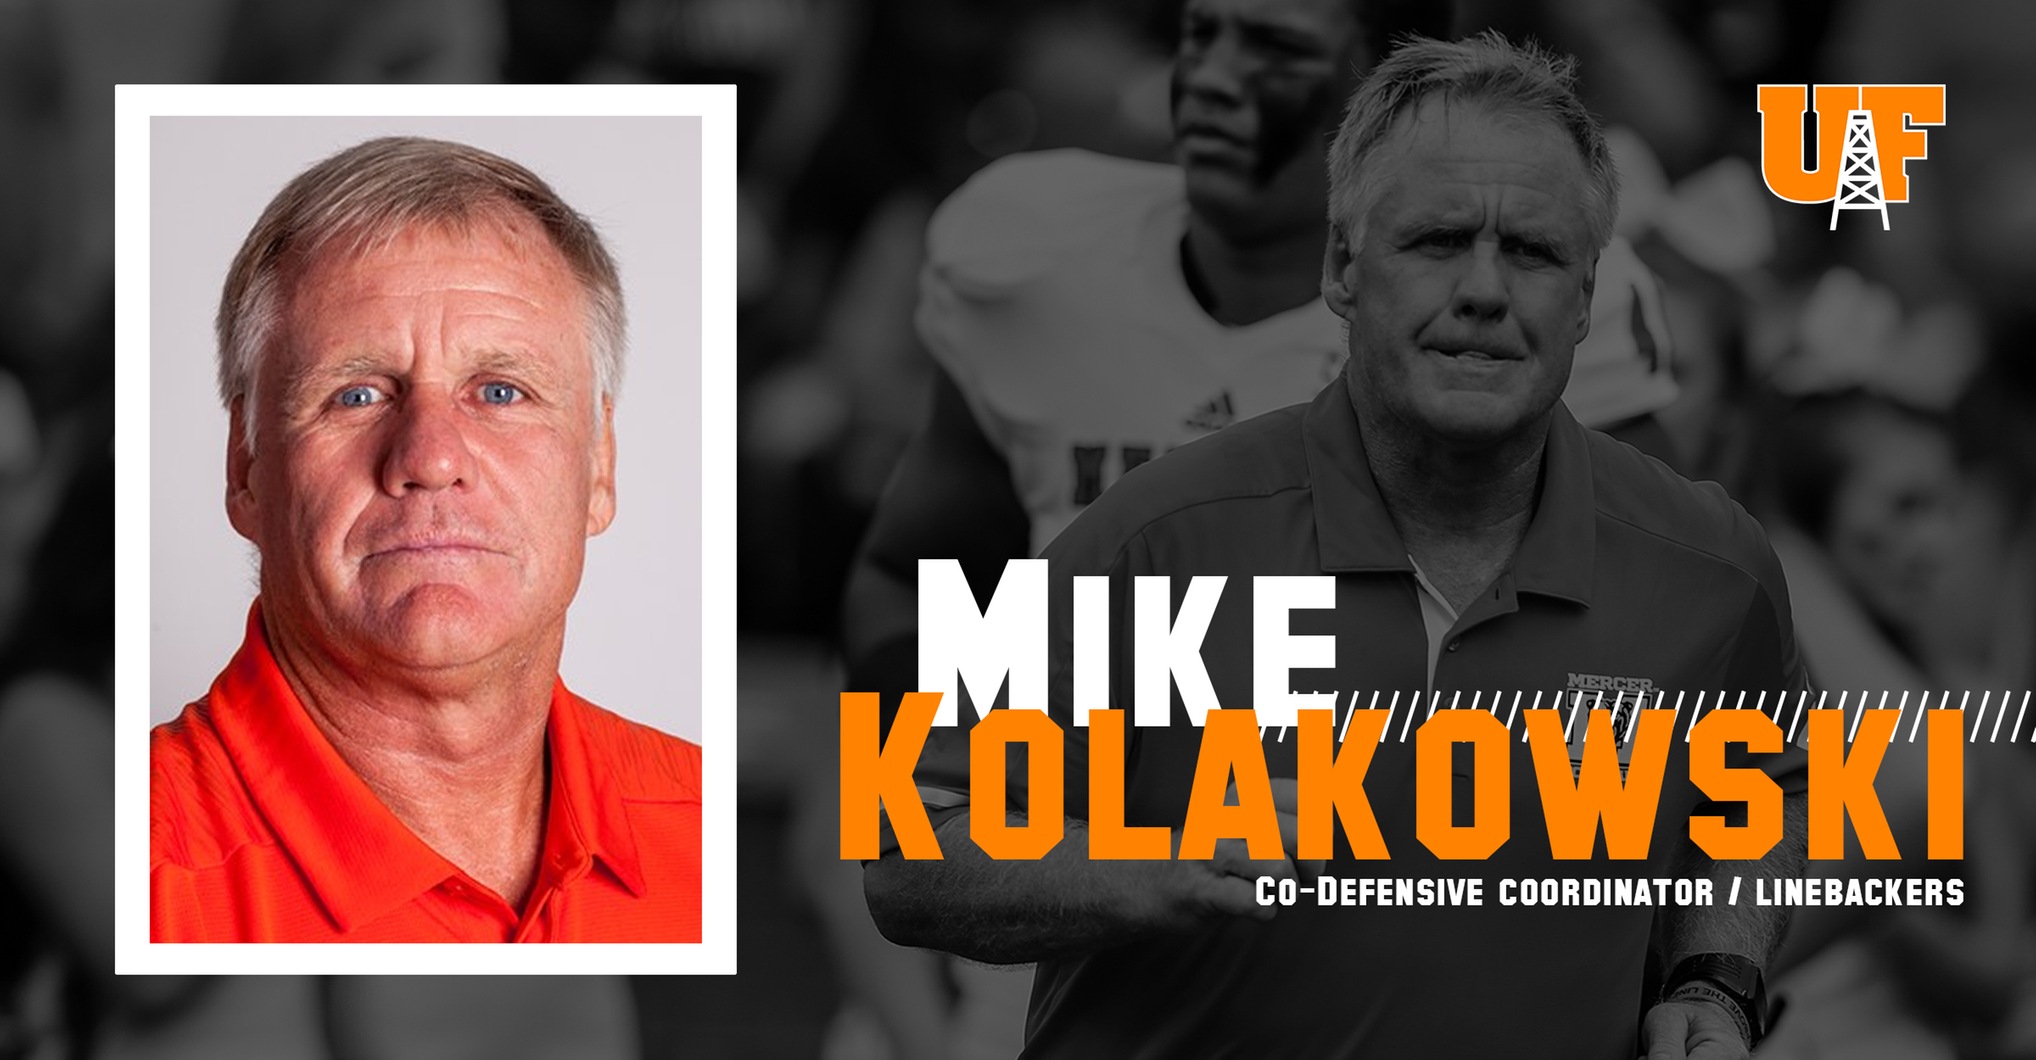 Kolakowski Hired as Co-Defensive Coordinator